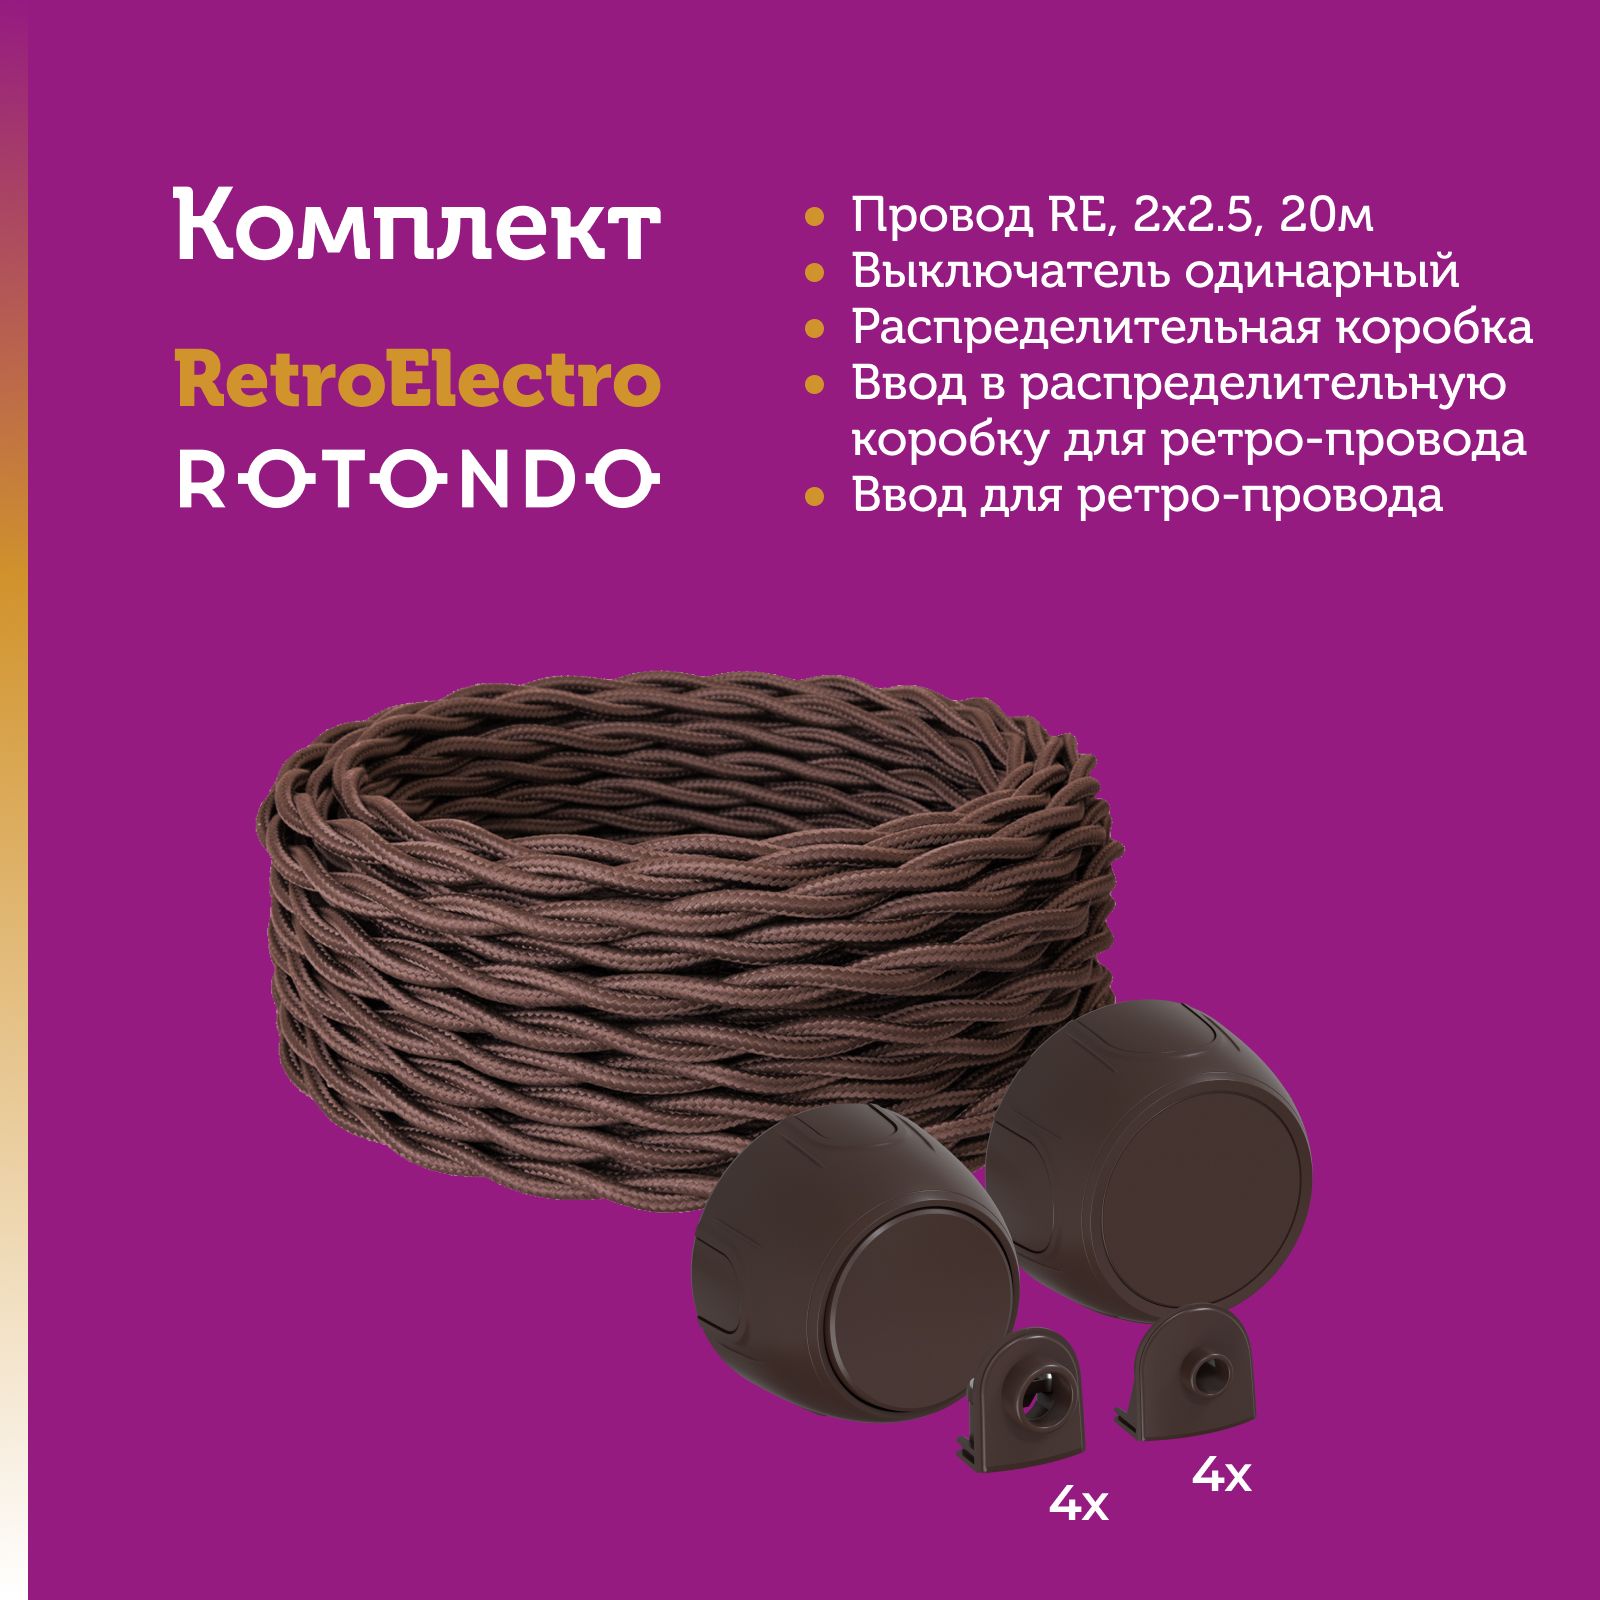 фото Комплект. кабель retro electro и электроустановочные изделия rotondo (onekeyelectro)